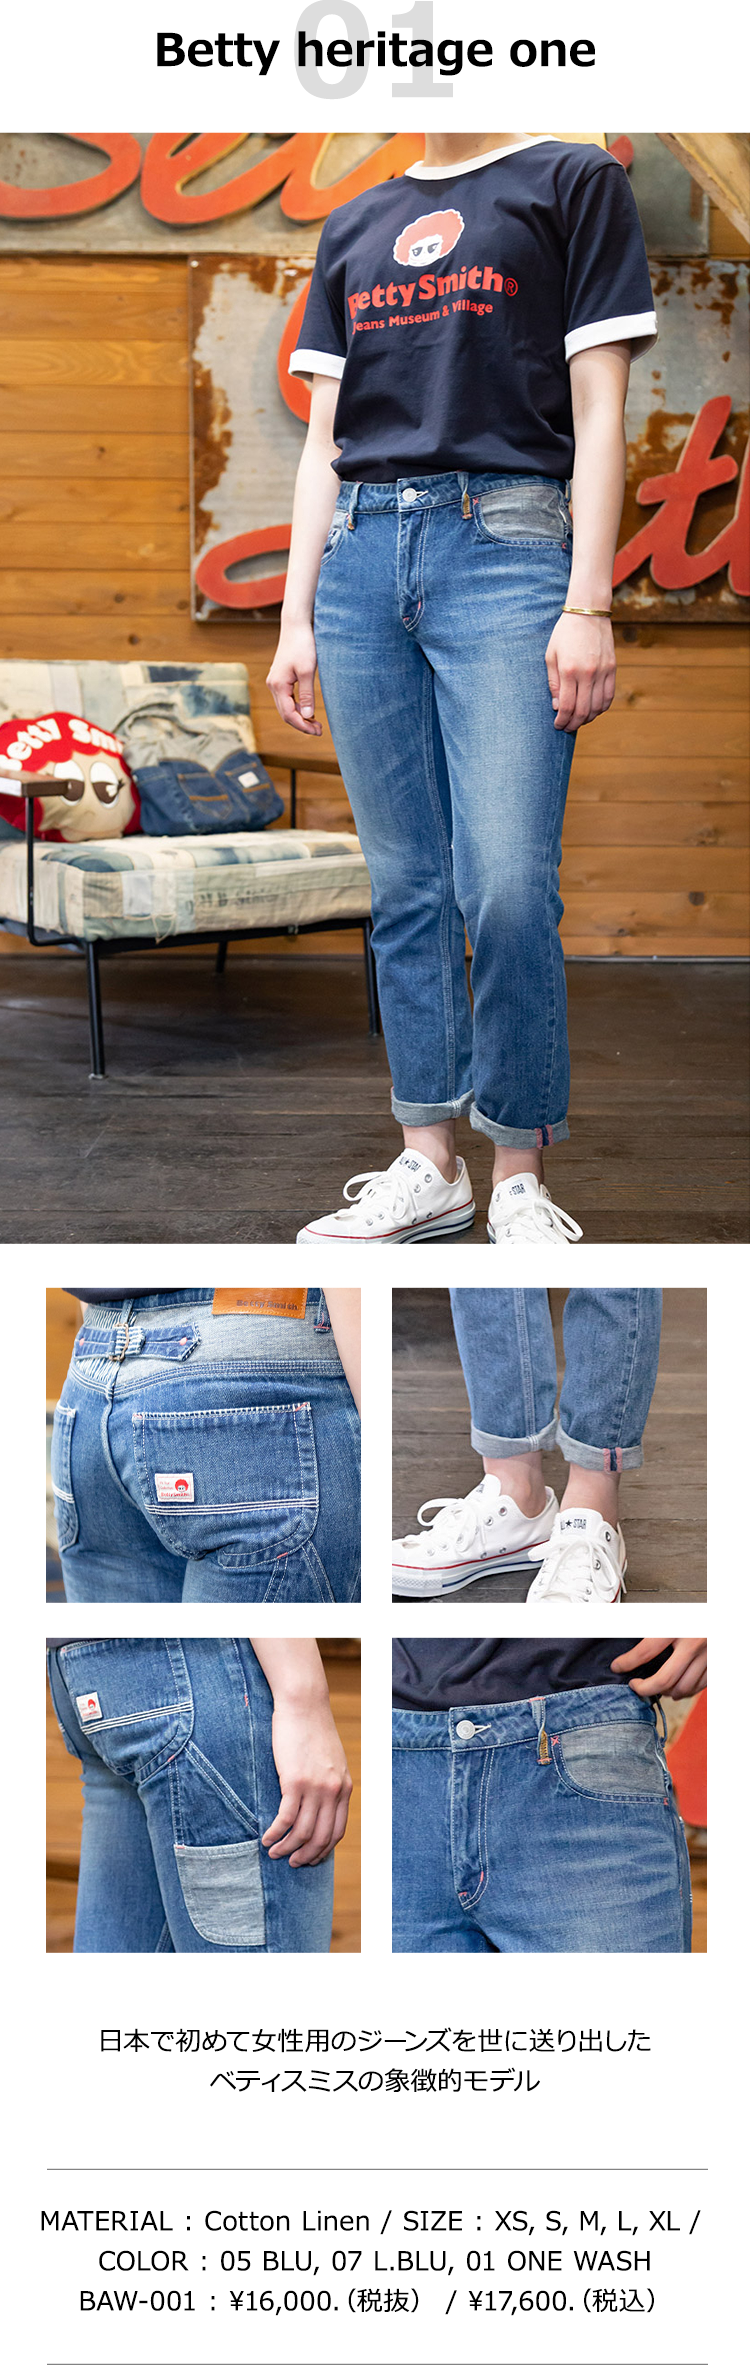 Betty heritage one 日本で初めて女性用のジーンズを世に送り出したベティスミスの象徴的モデル MATERIAL : Cotton Linen / SIZE : XS, S, M, L / COLOR : 05 BLU, 07 L.BLU BAW-001 : ￥16,000.（税抜） / ￥17,600.（税込）